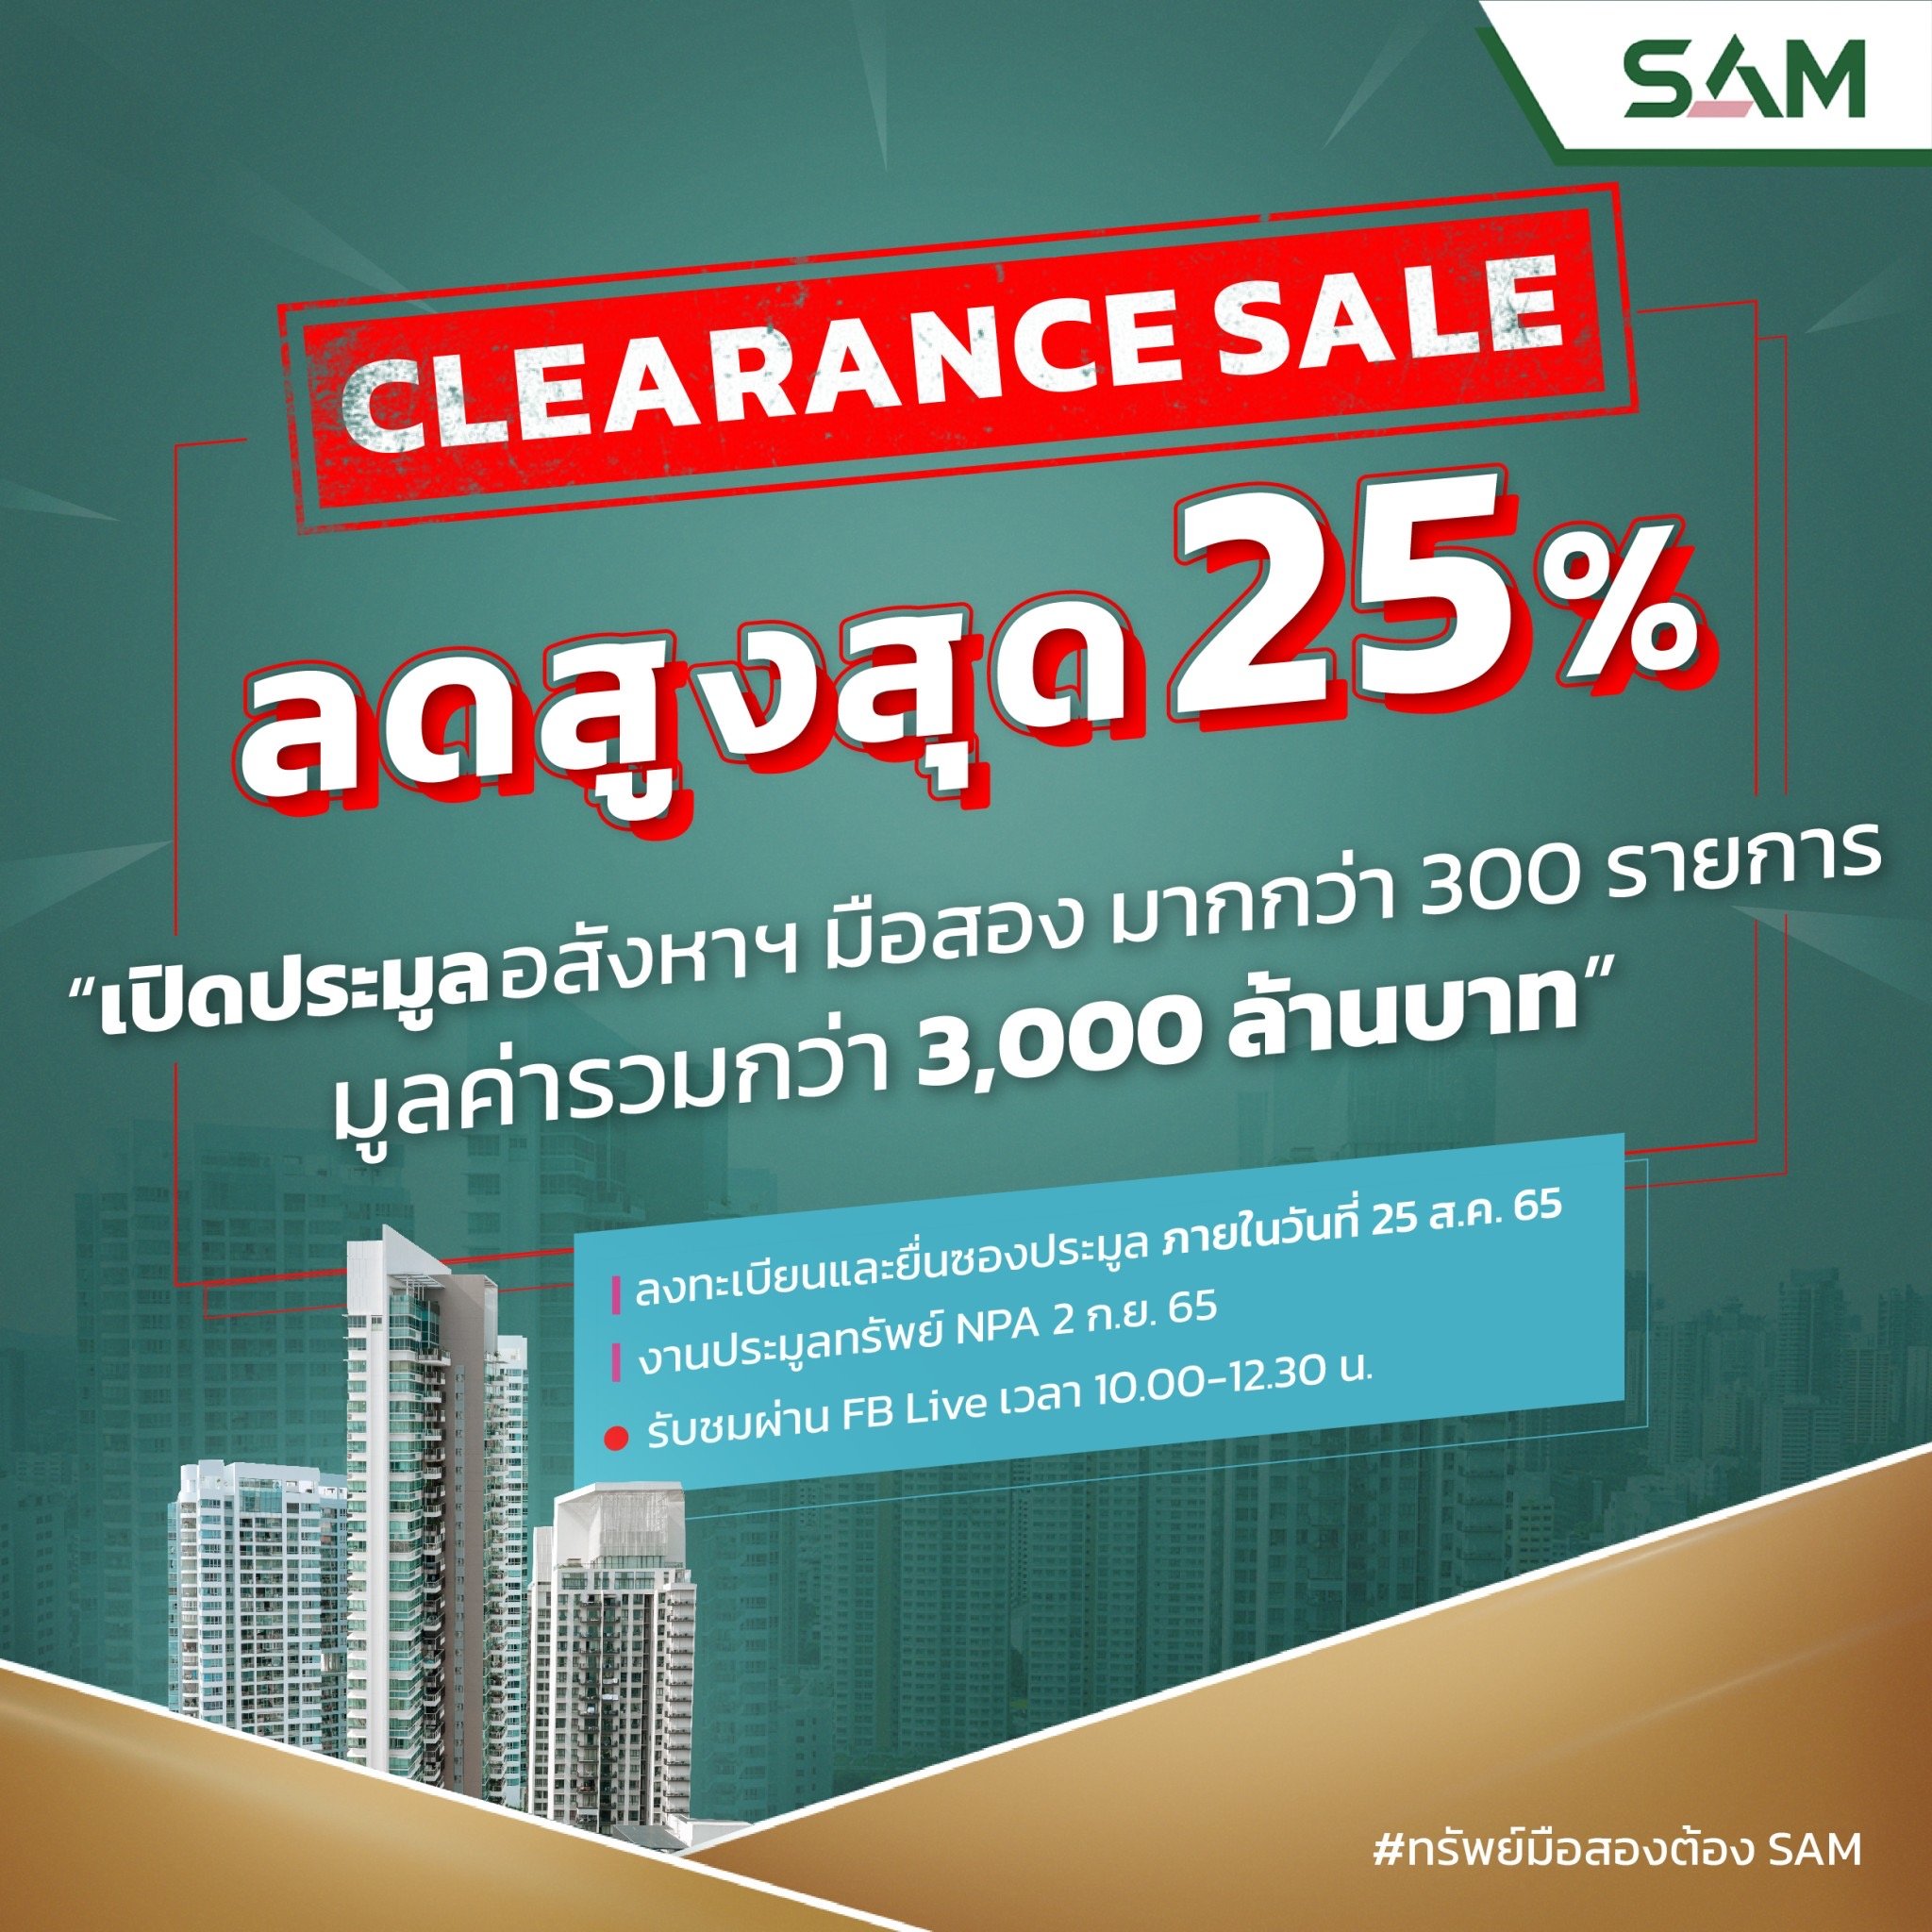 Clearance Sale! ครั้งใหญ่ บริษัทบริหารสินทรัพย์ของคนไทย เปิดประมูลอสังหาฯ ลดกระหน่ำสูงสุดกว่า 25%